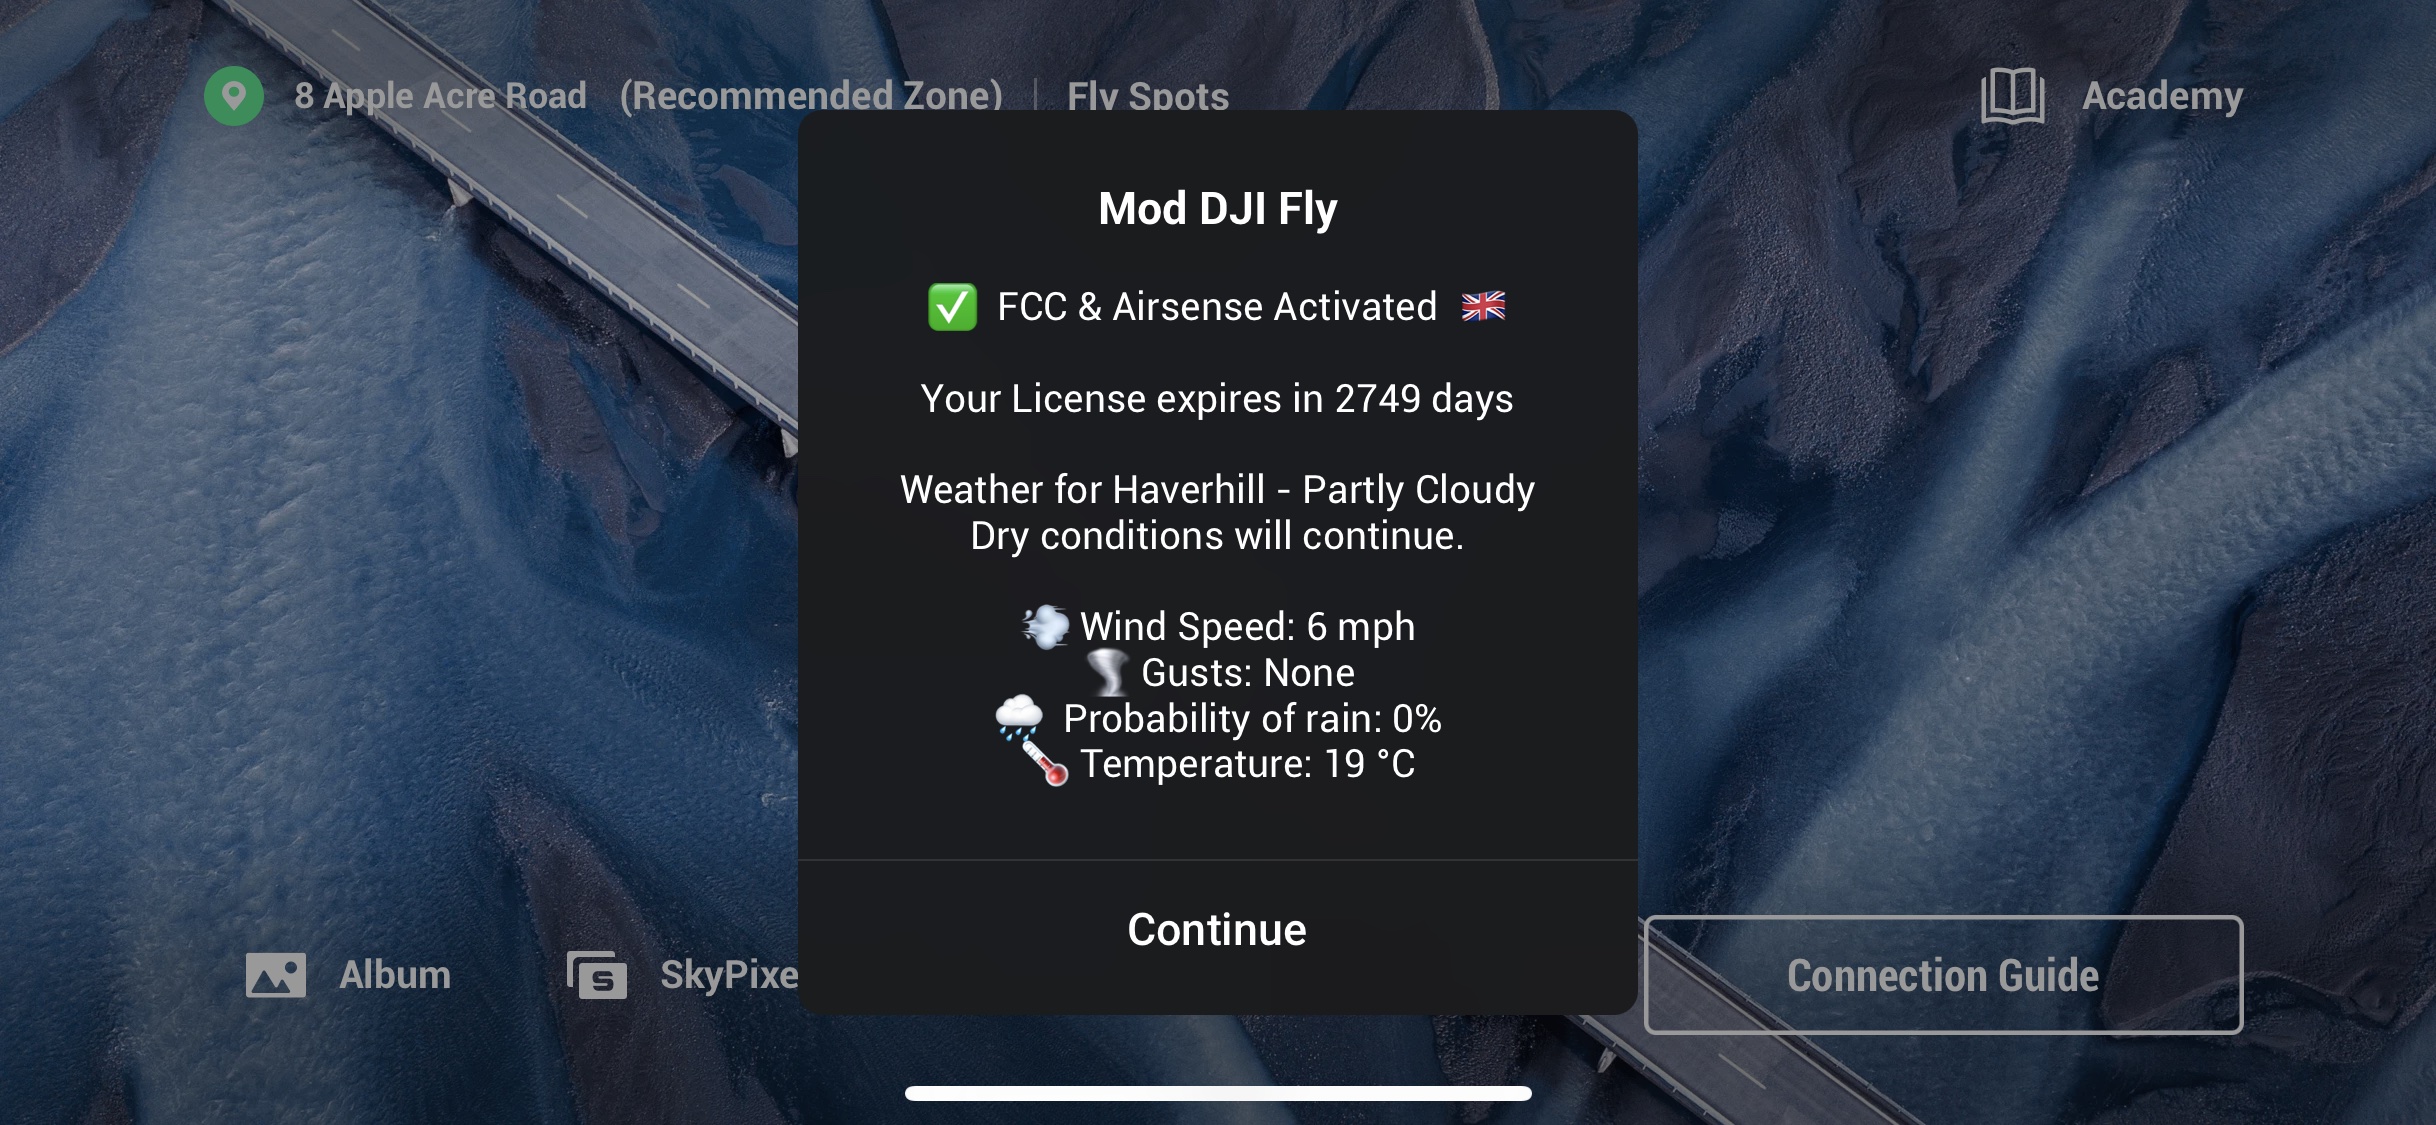 Mod DJI Fly